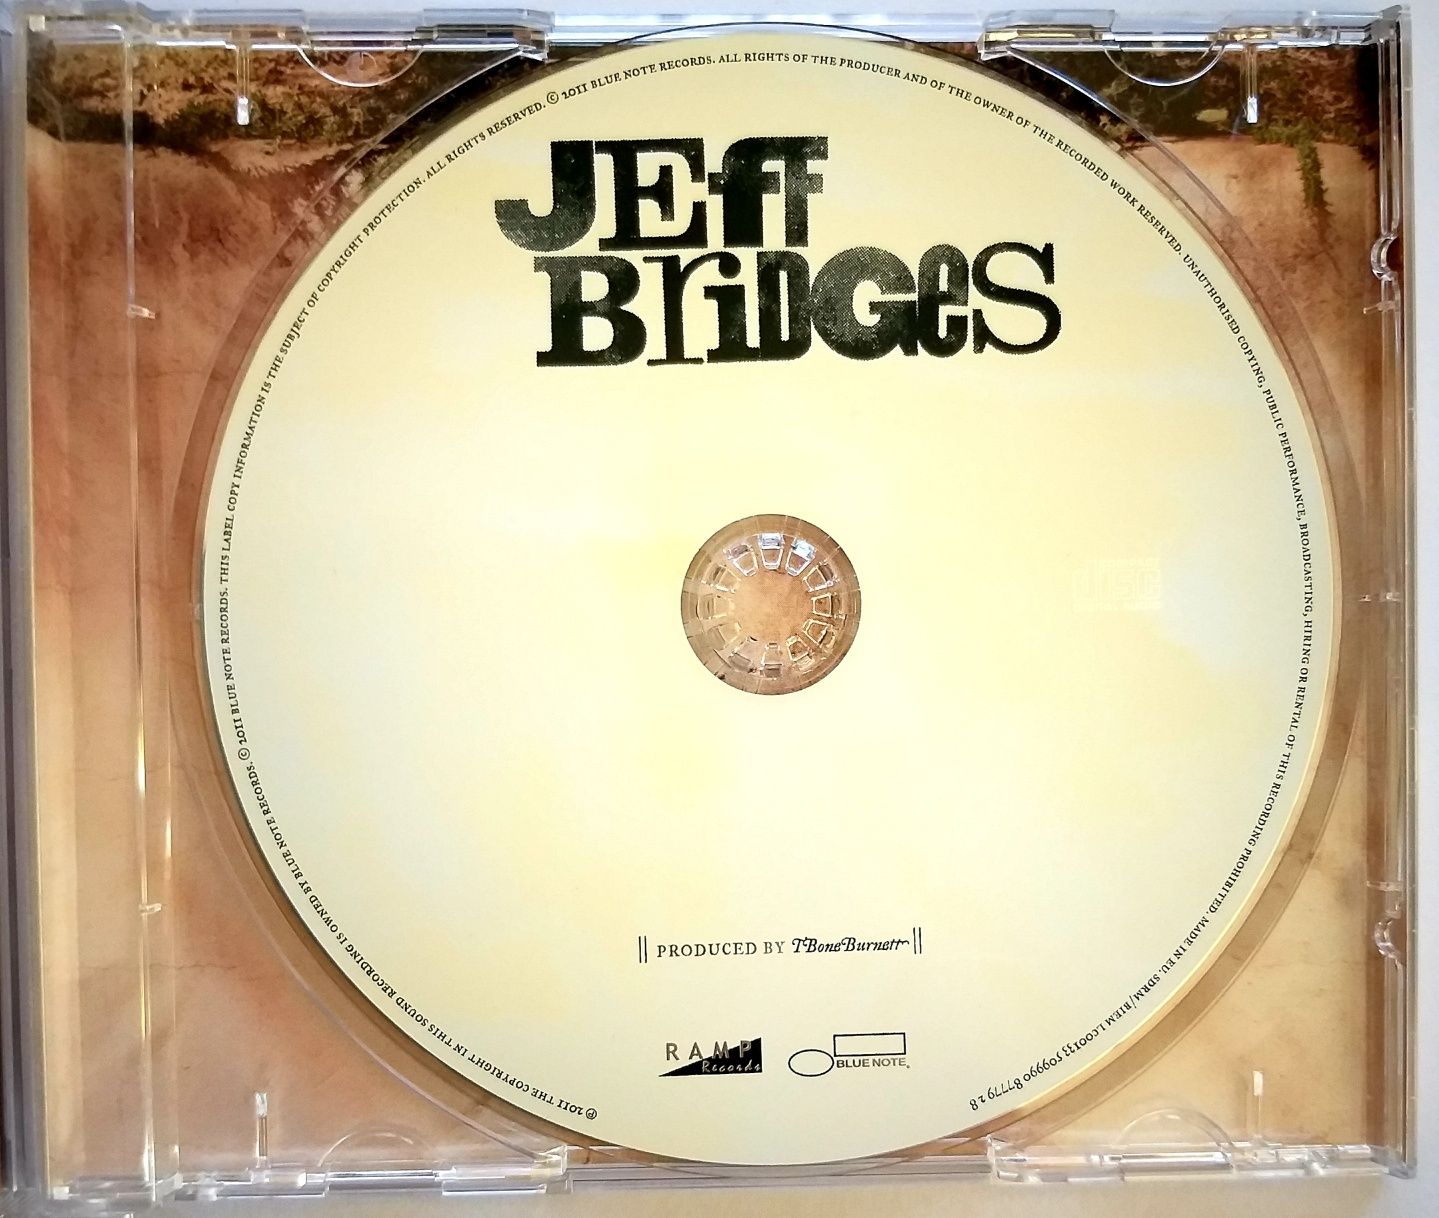 Jeff Bridges 2013r